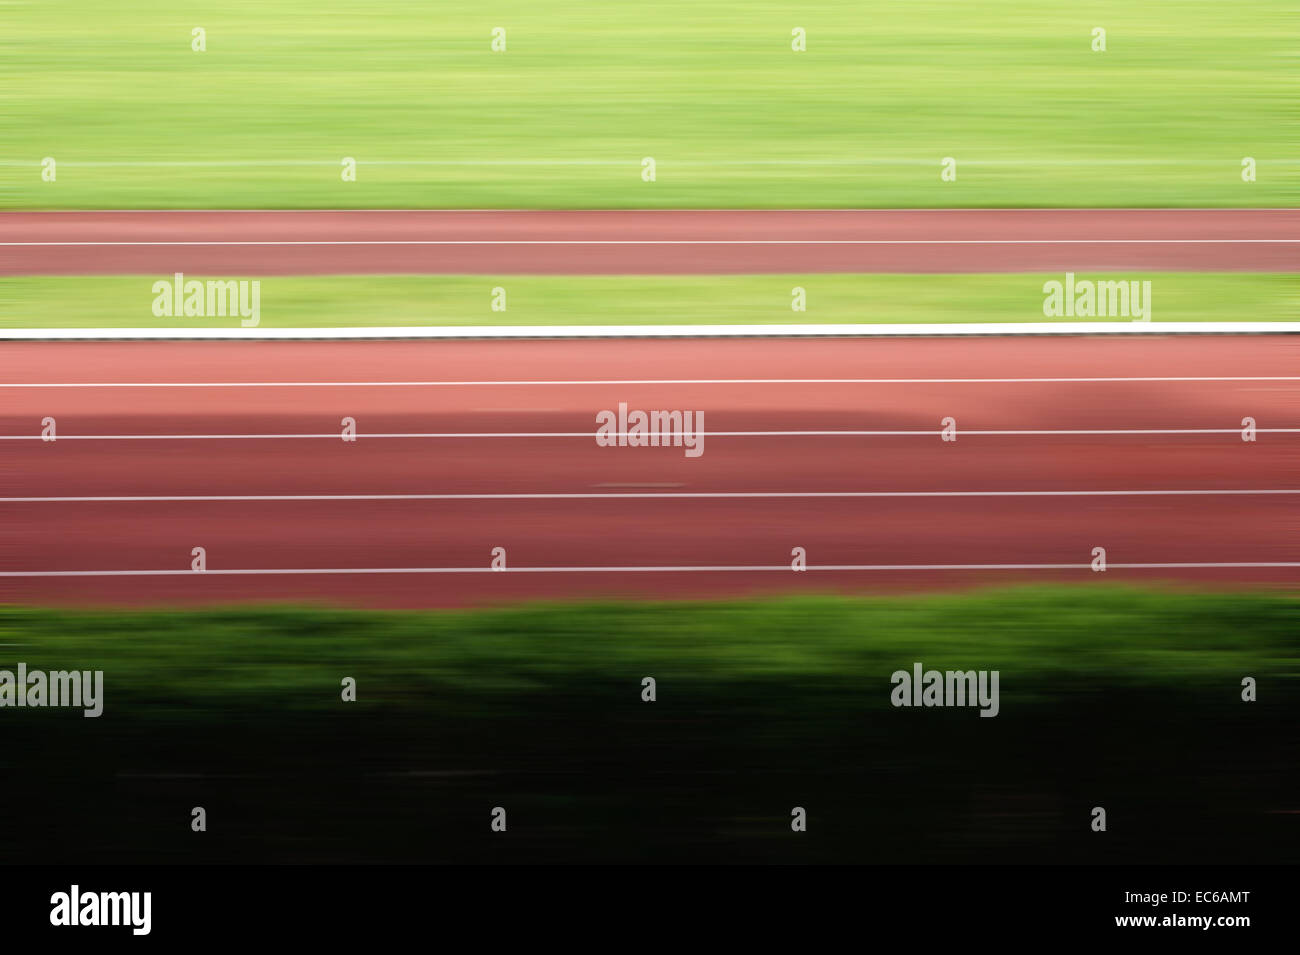 100 m track Stock Photo